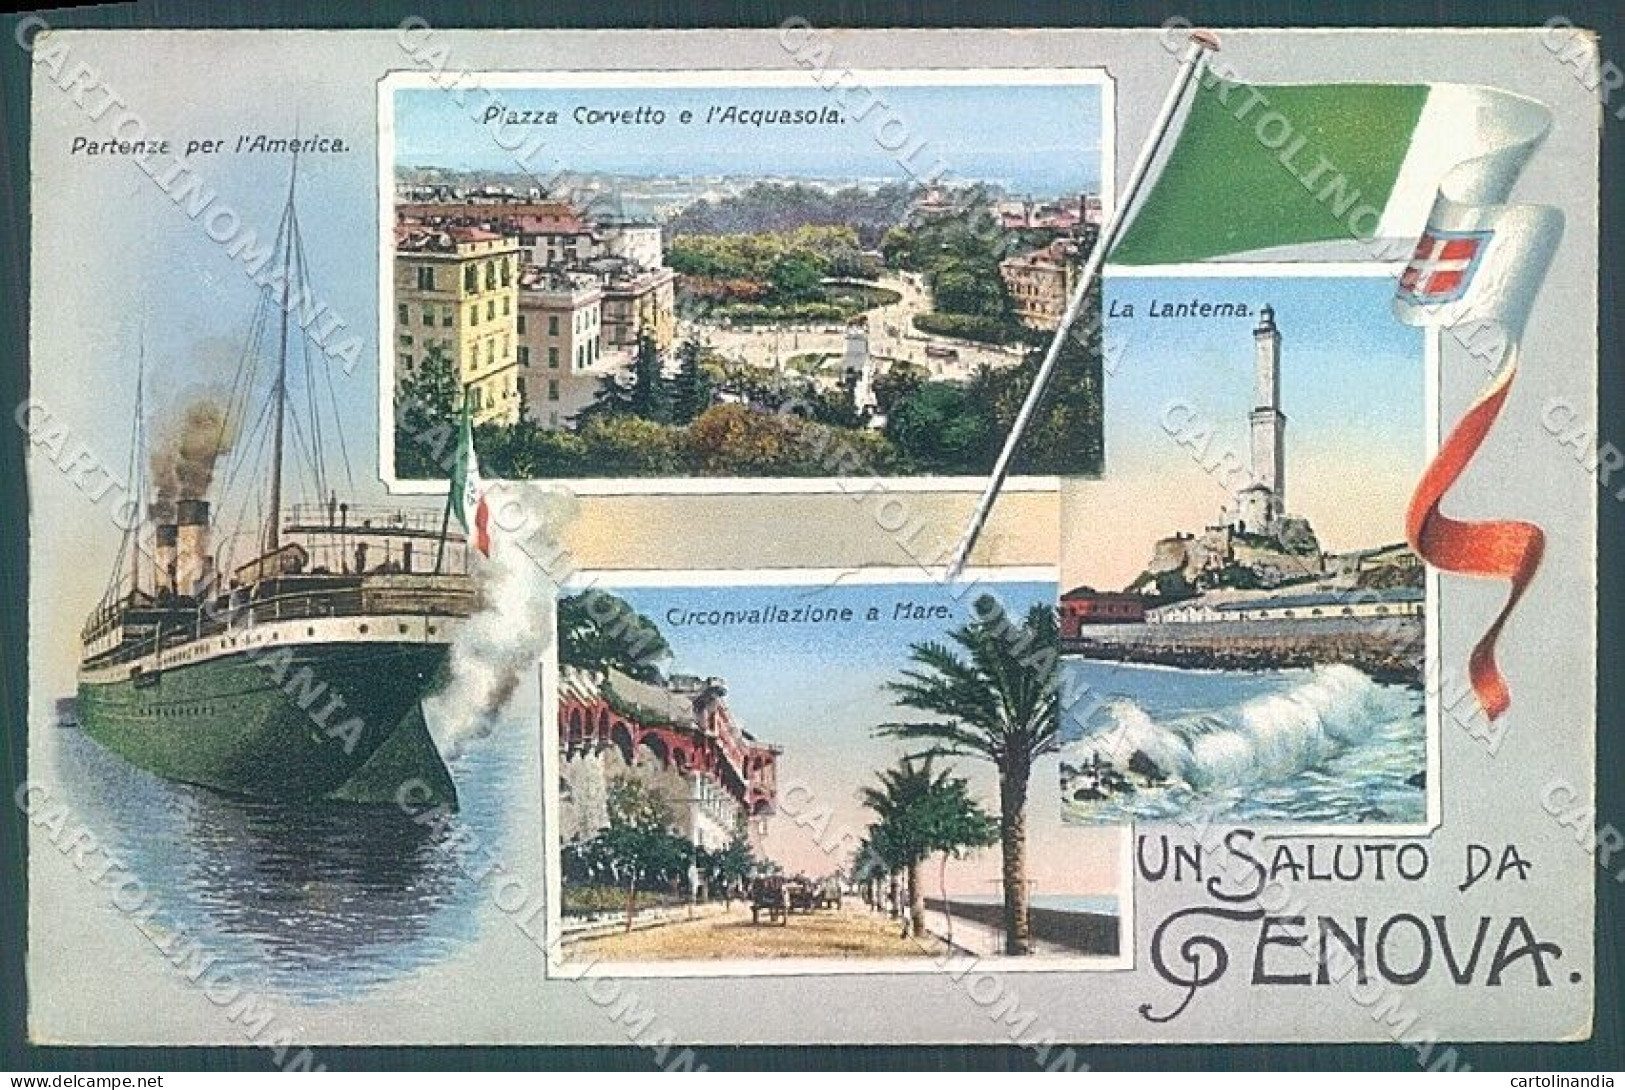 Genova Città Tricolore Nave Lanterna Saluto Da Cartolina JK4757 - Genova (Genua)